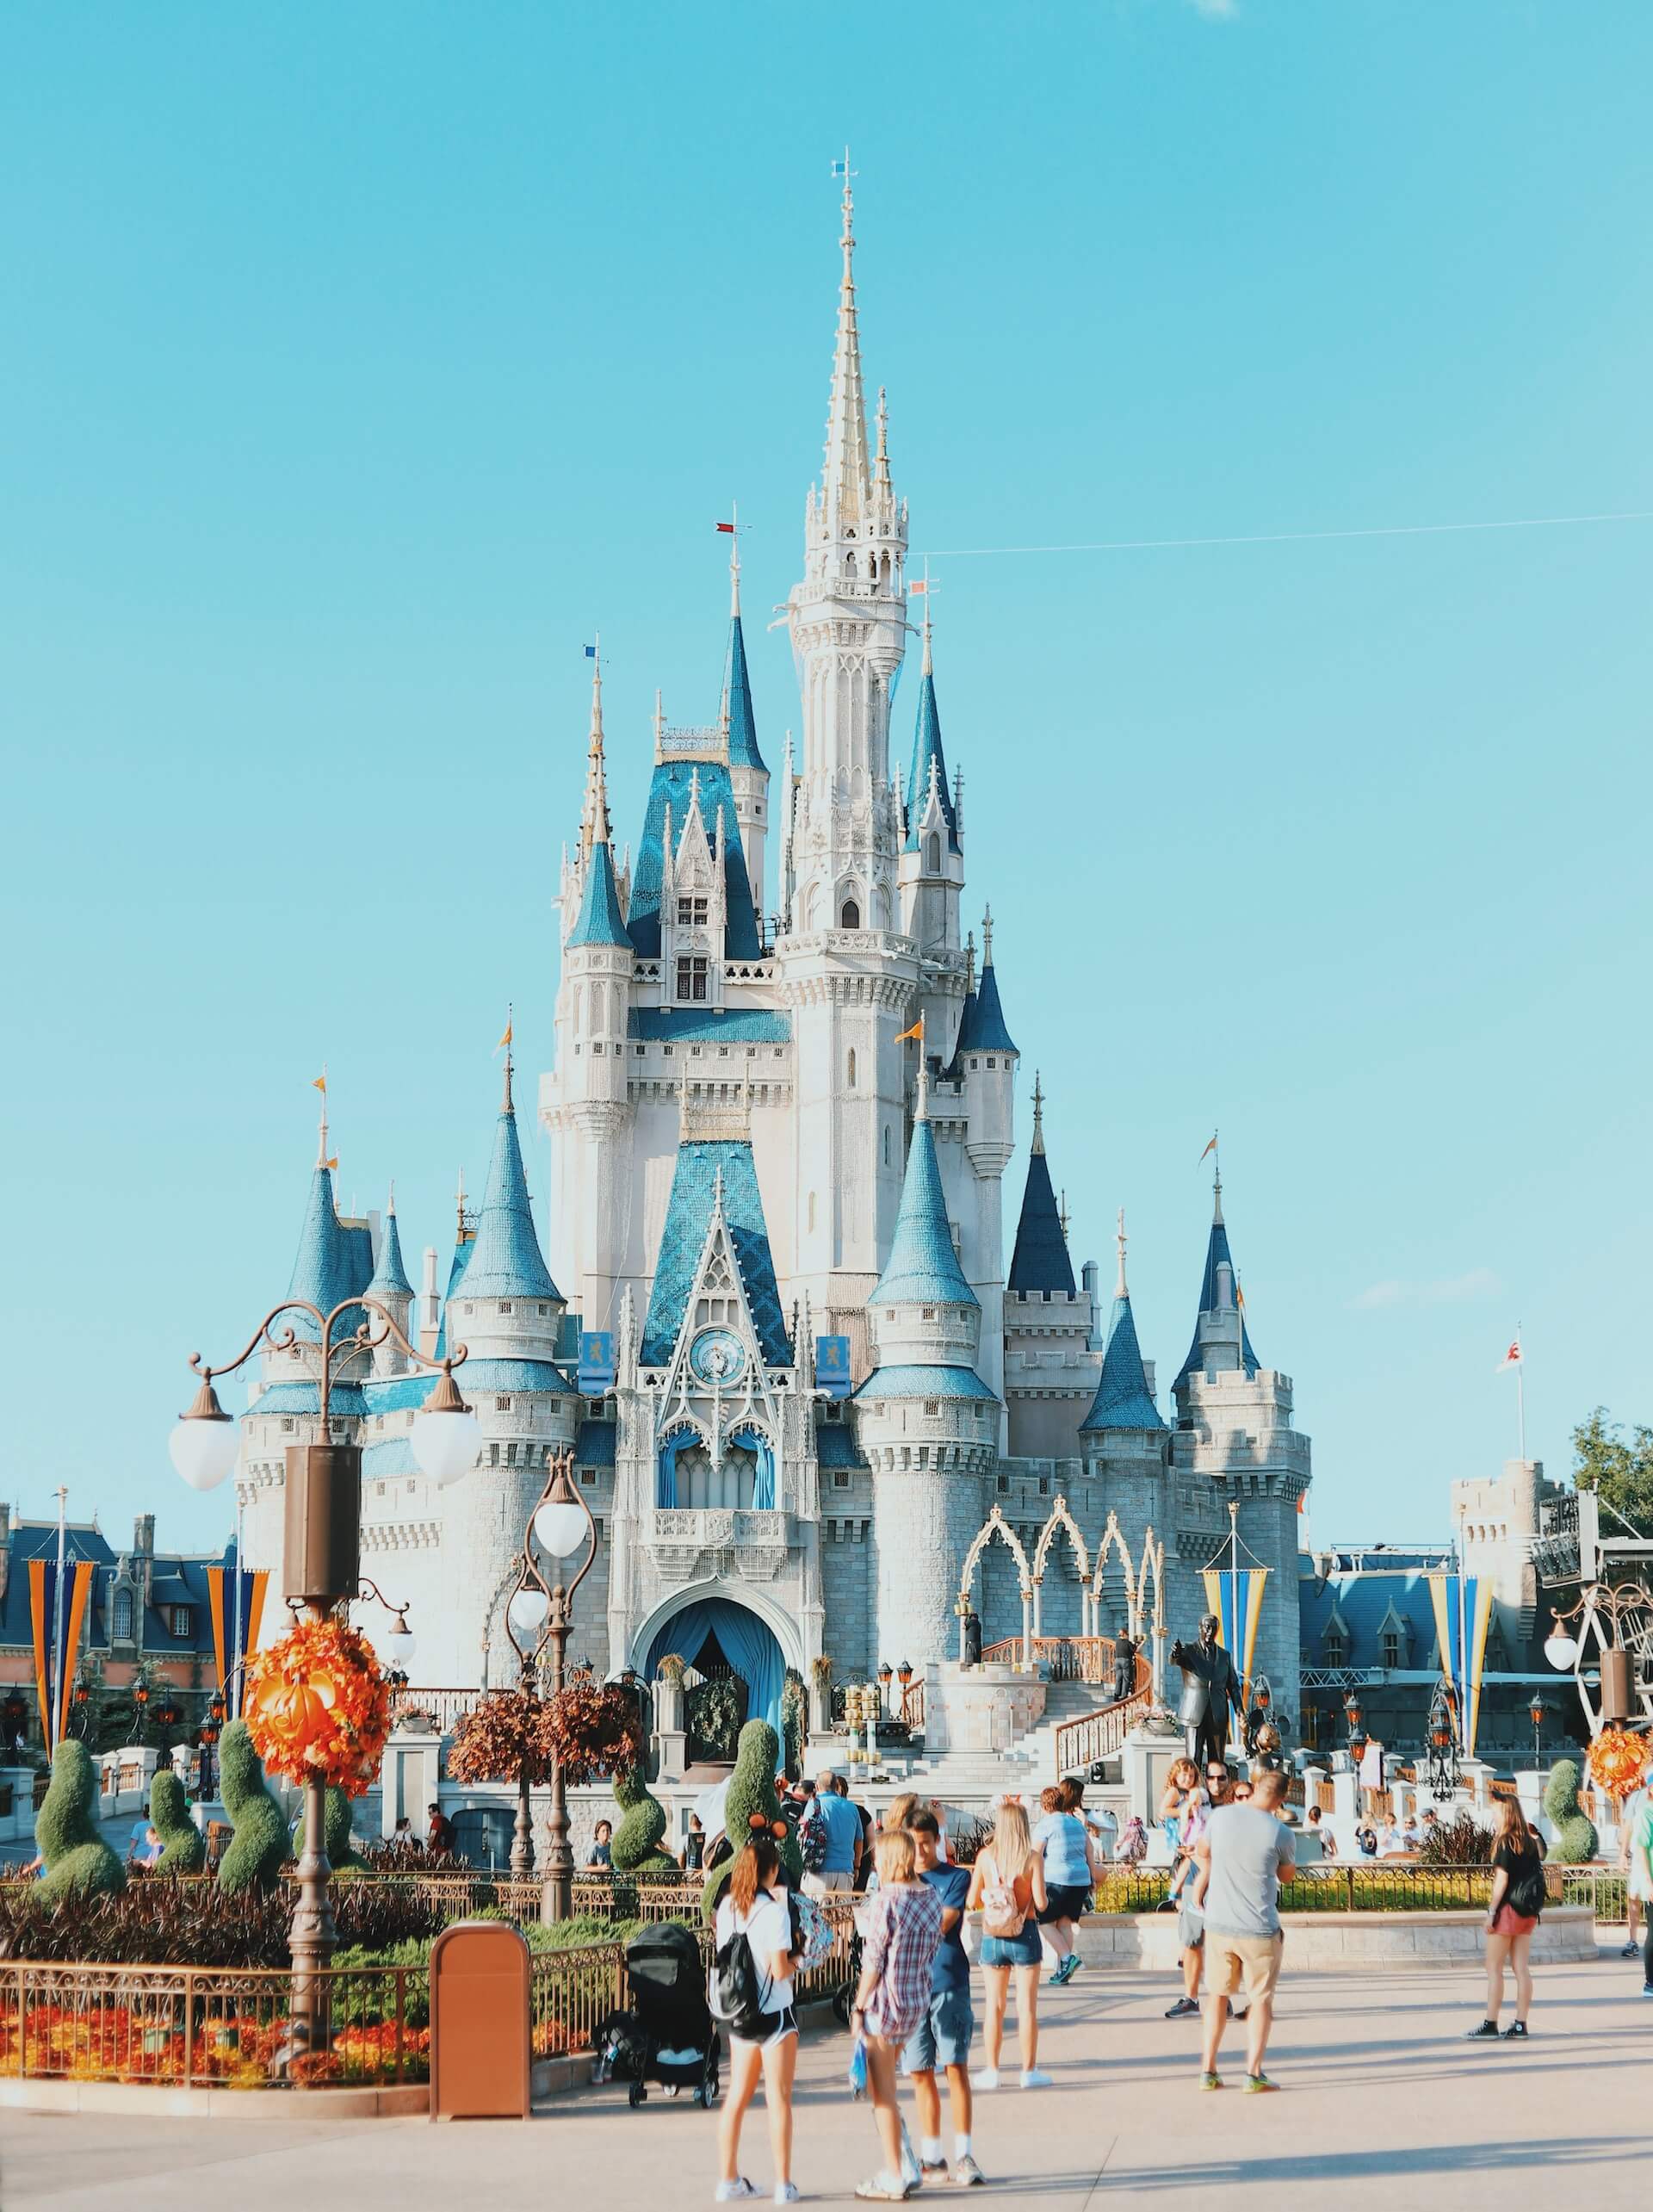 Disney World Florida - Magic Kingdom